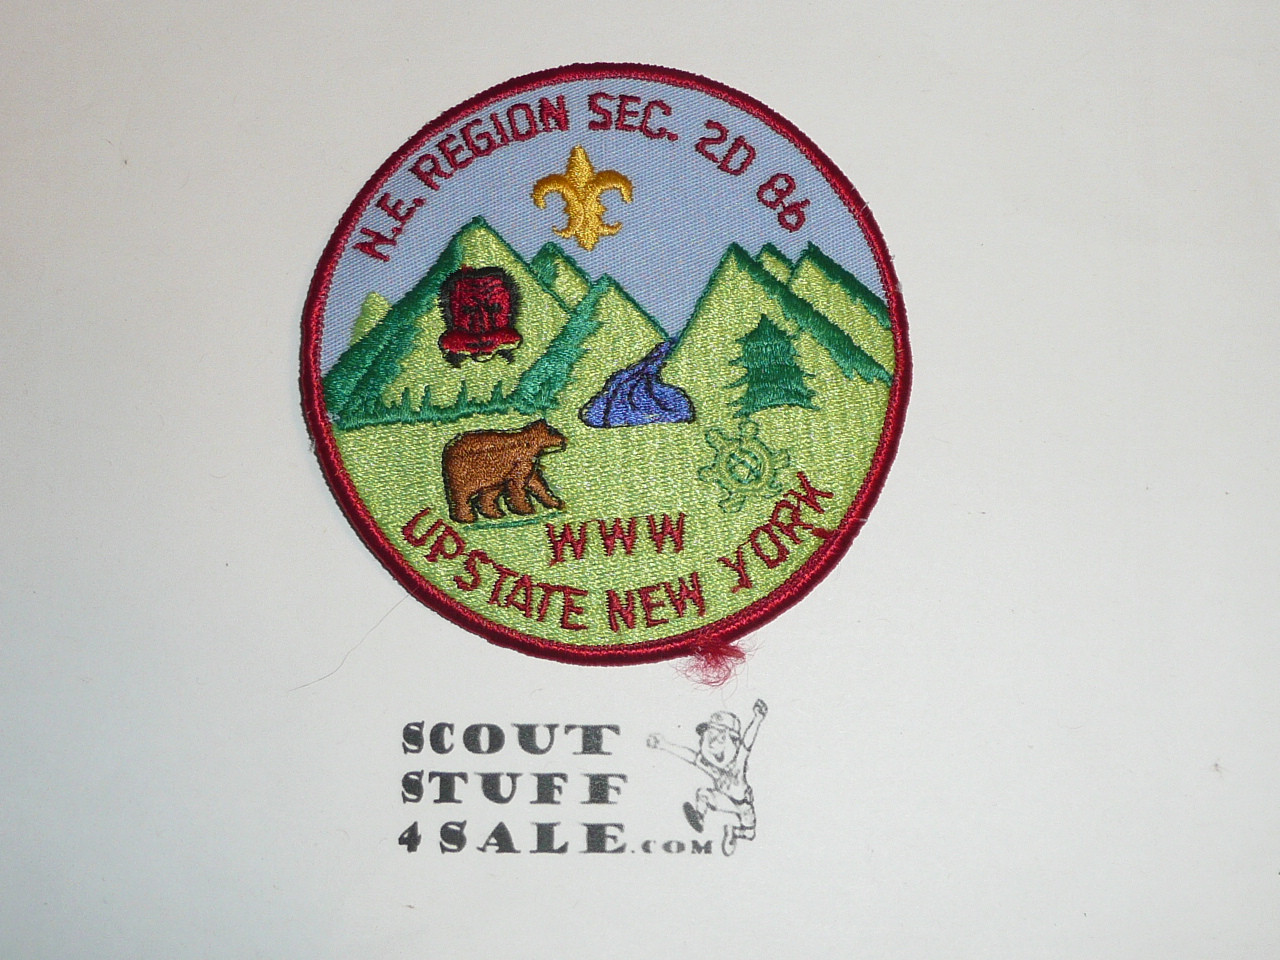 Area NE 2-D 1986 O.A. Conference Patch - Scout